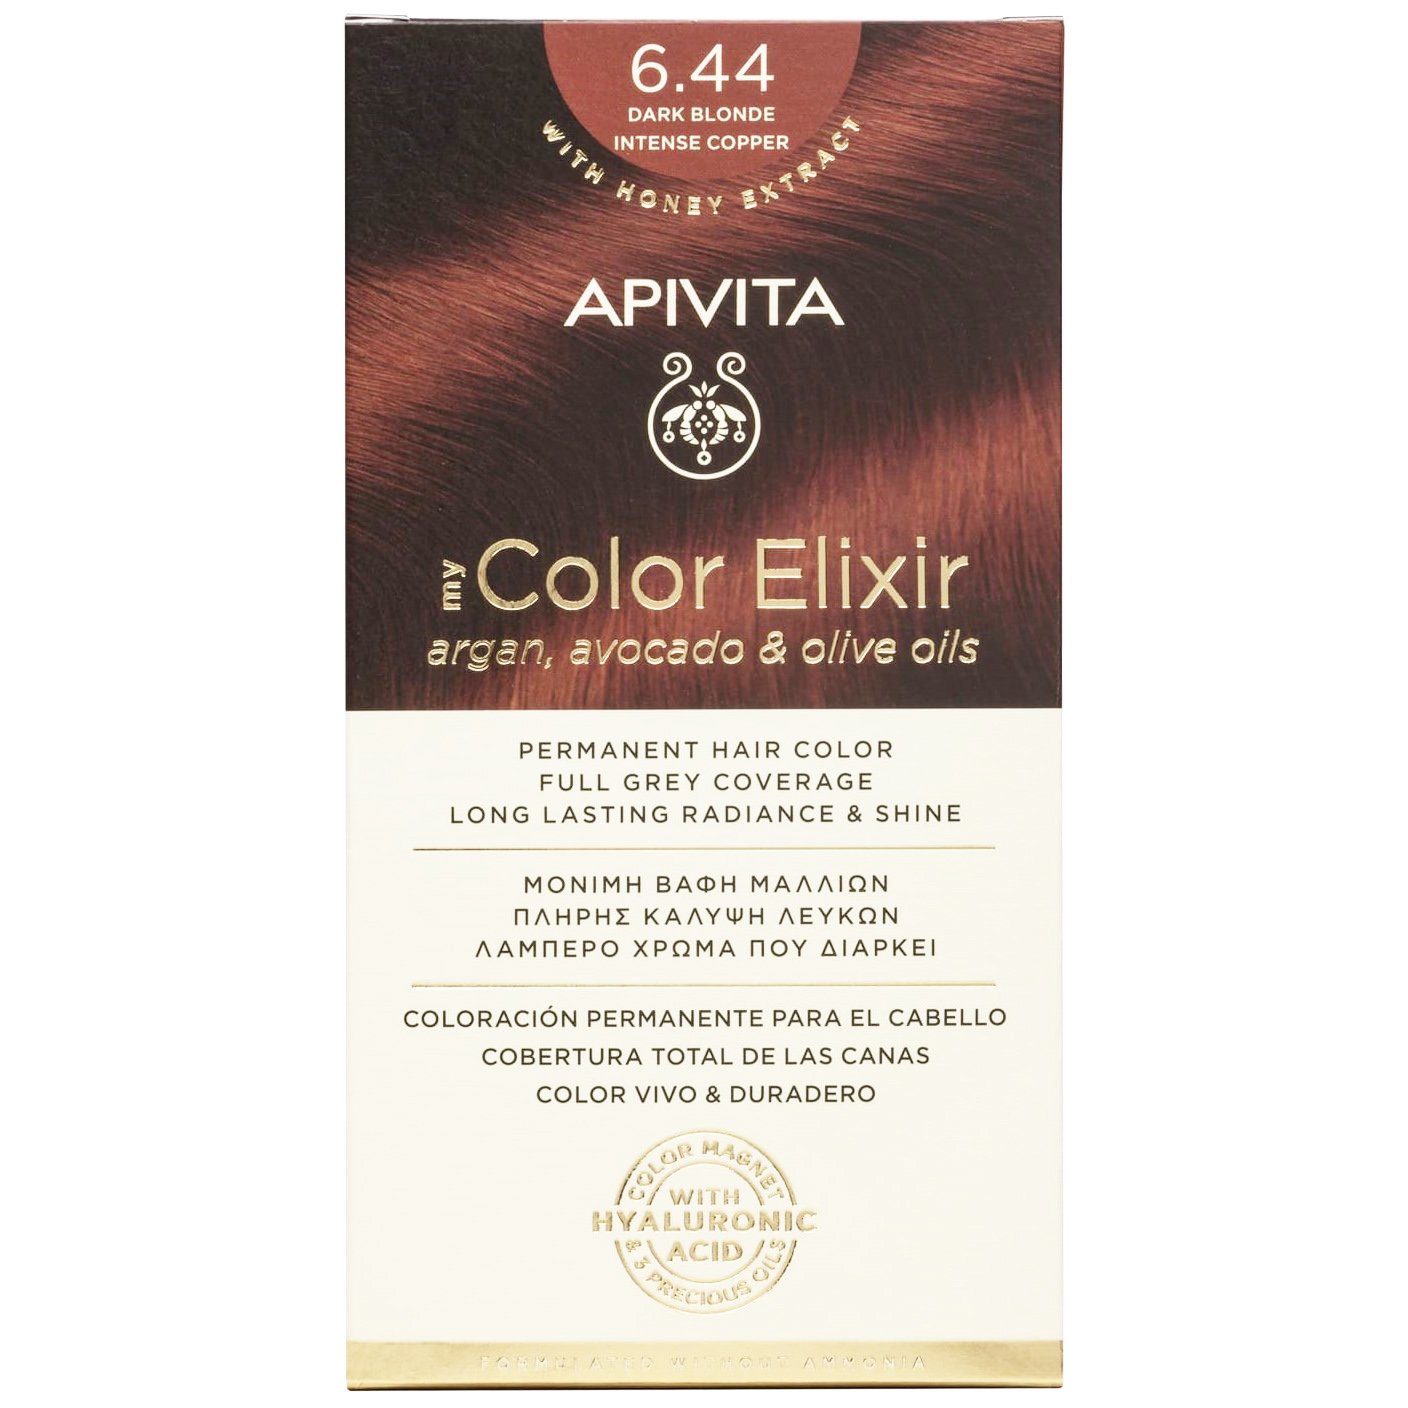 Apivita Promo My Color Elixir Permanent Hair Color Μόνιμη Βαφή Μαλλιών για Λαμπερό Χρώμα που Διαρκεί – 6.44 Ξανθό Σκούρο Έντονο Χάλκινο